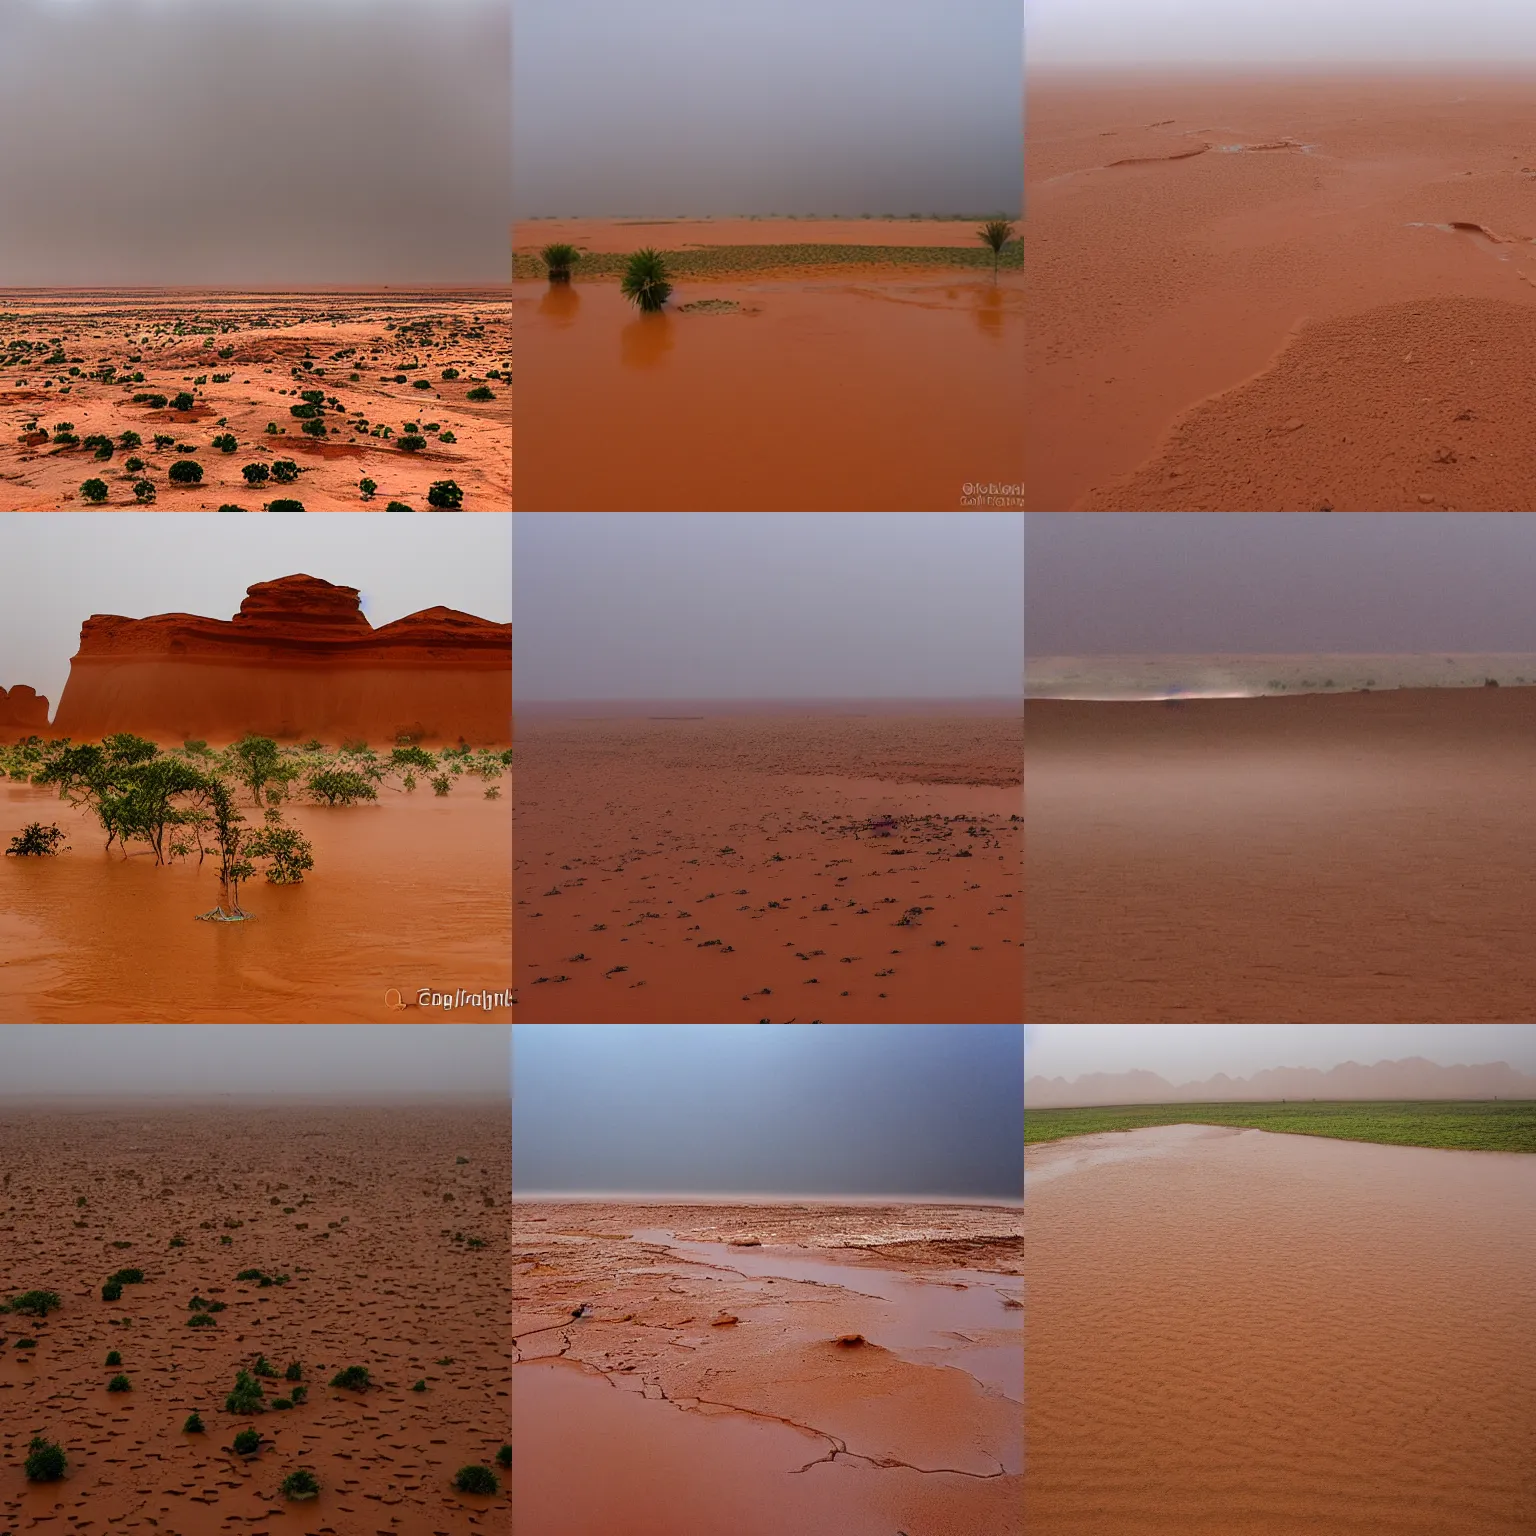 Prompt: heavy monsoon rain in the sahara desert